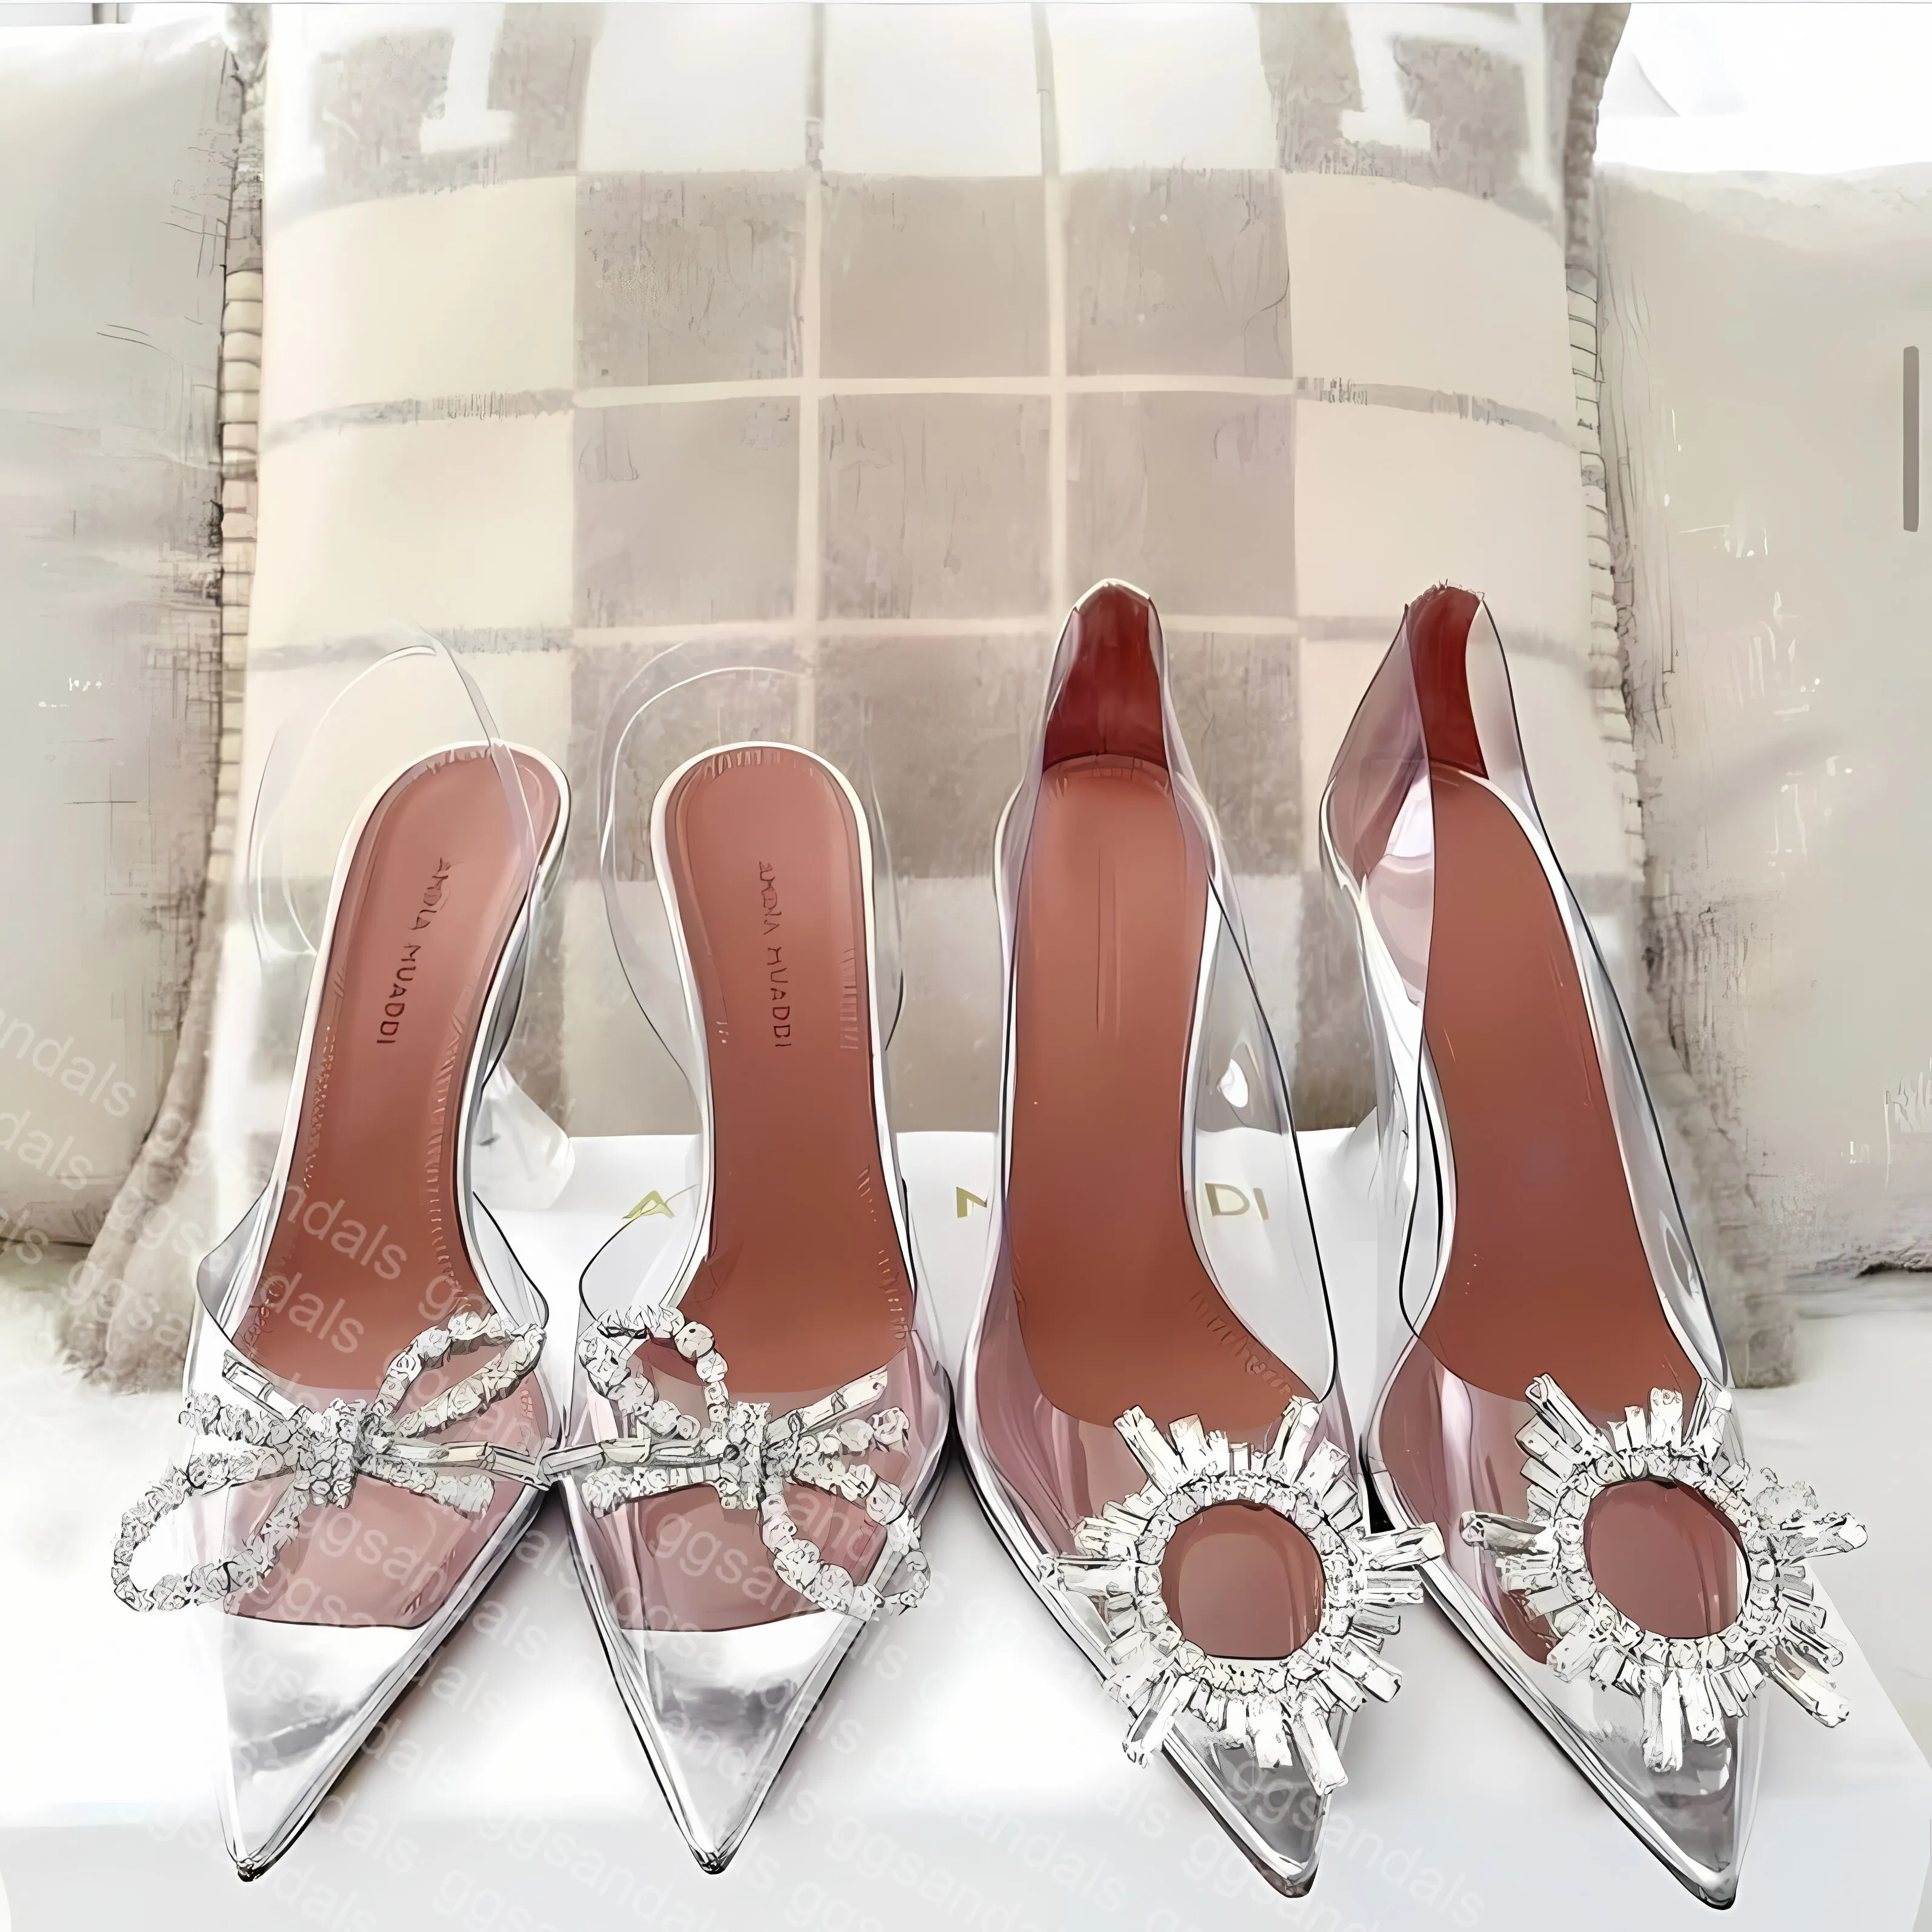 Amina muaddi begum shoes luxurys designers dress shoe clear pvc transluent pumps spool heels sandals women evening heeled